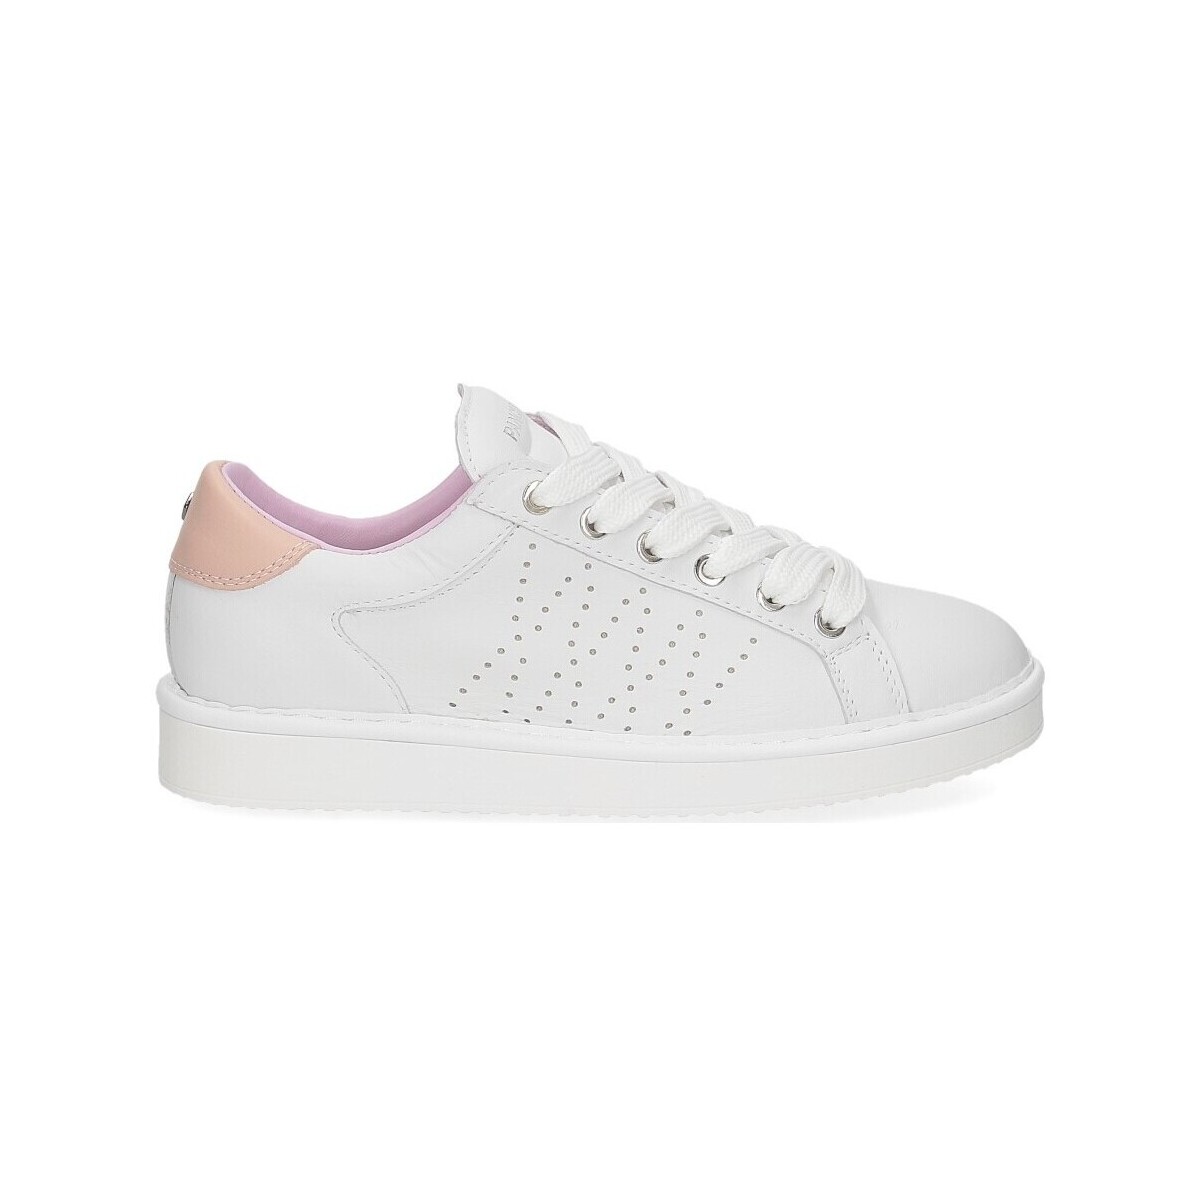 Scarpe Donna Sneakers Panchic P01W013 Lace-up shoe leather white powder pink Bianco